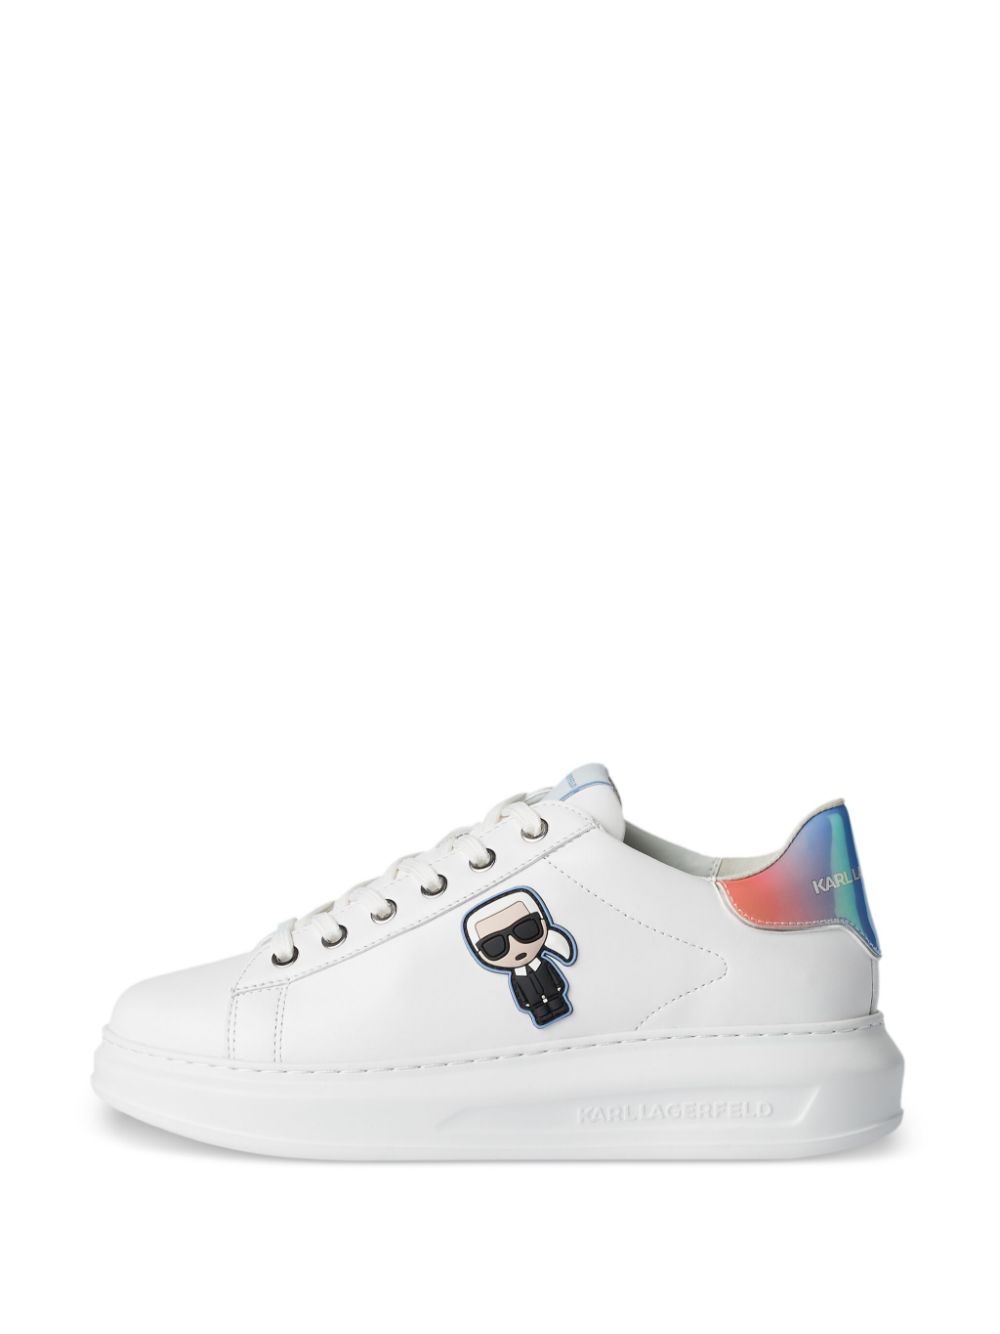 Karl Lagerfeld Kapri Gradient Kc Lo sneakers White